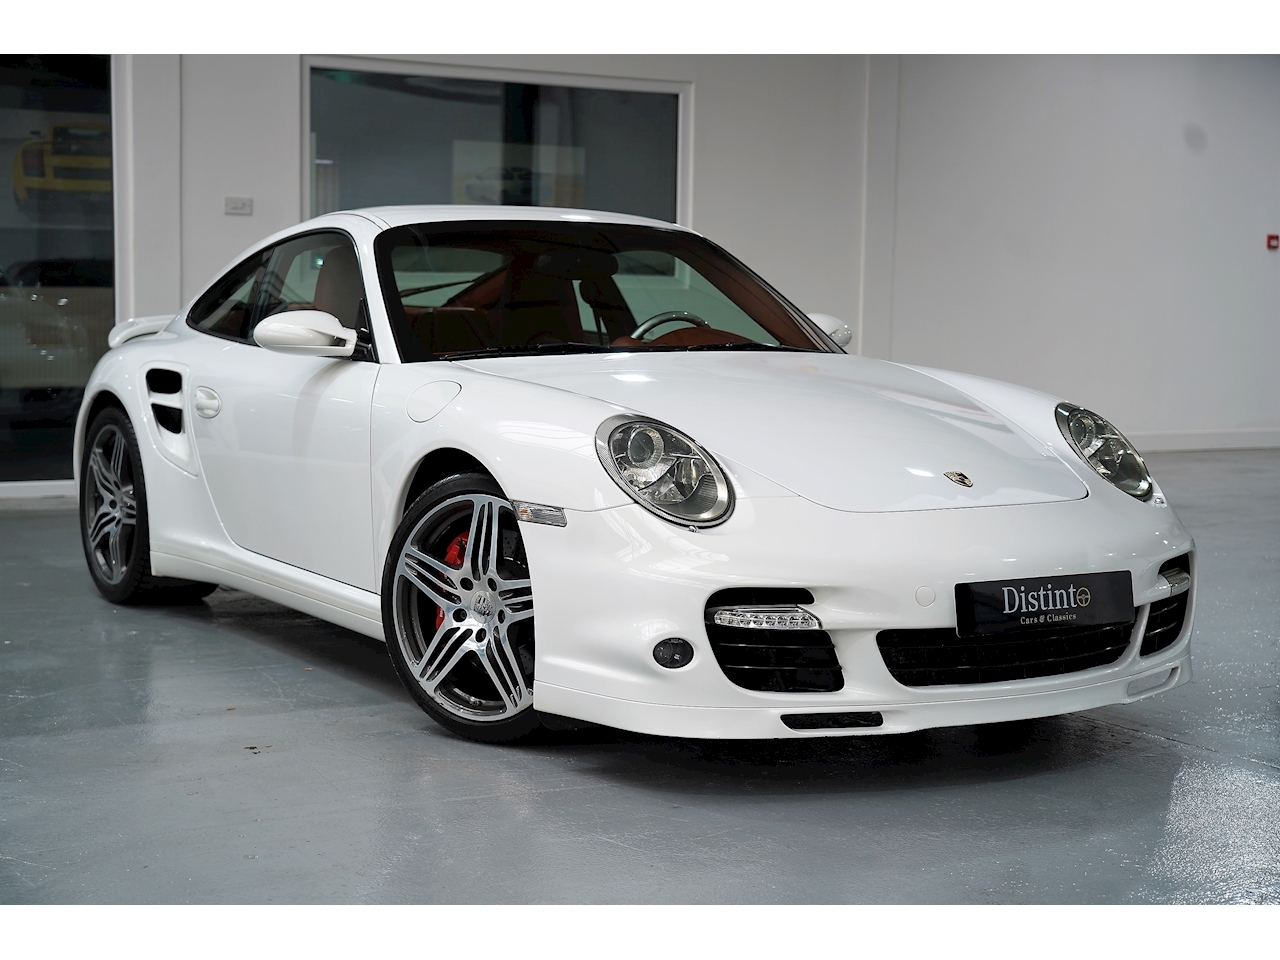 2007 Porsche 911 997 3.6 Turbo Tiptronic S - EU Left Hand Drive (LHD)